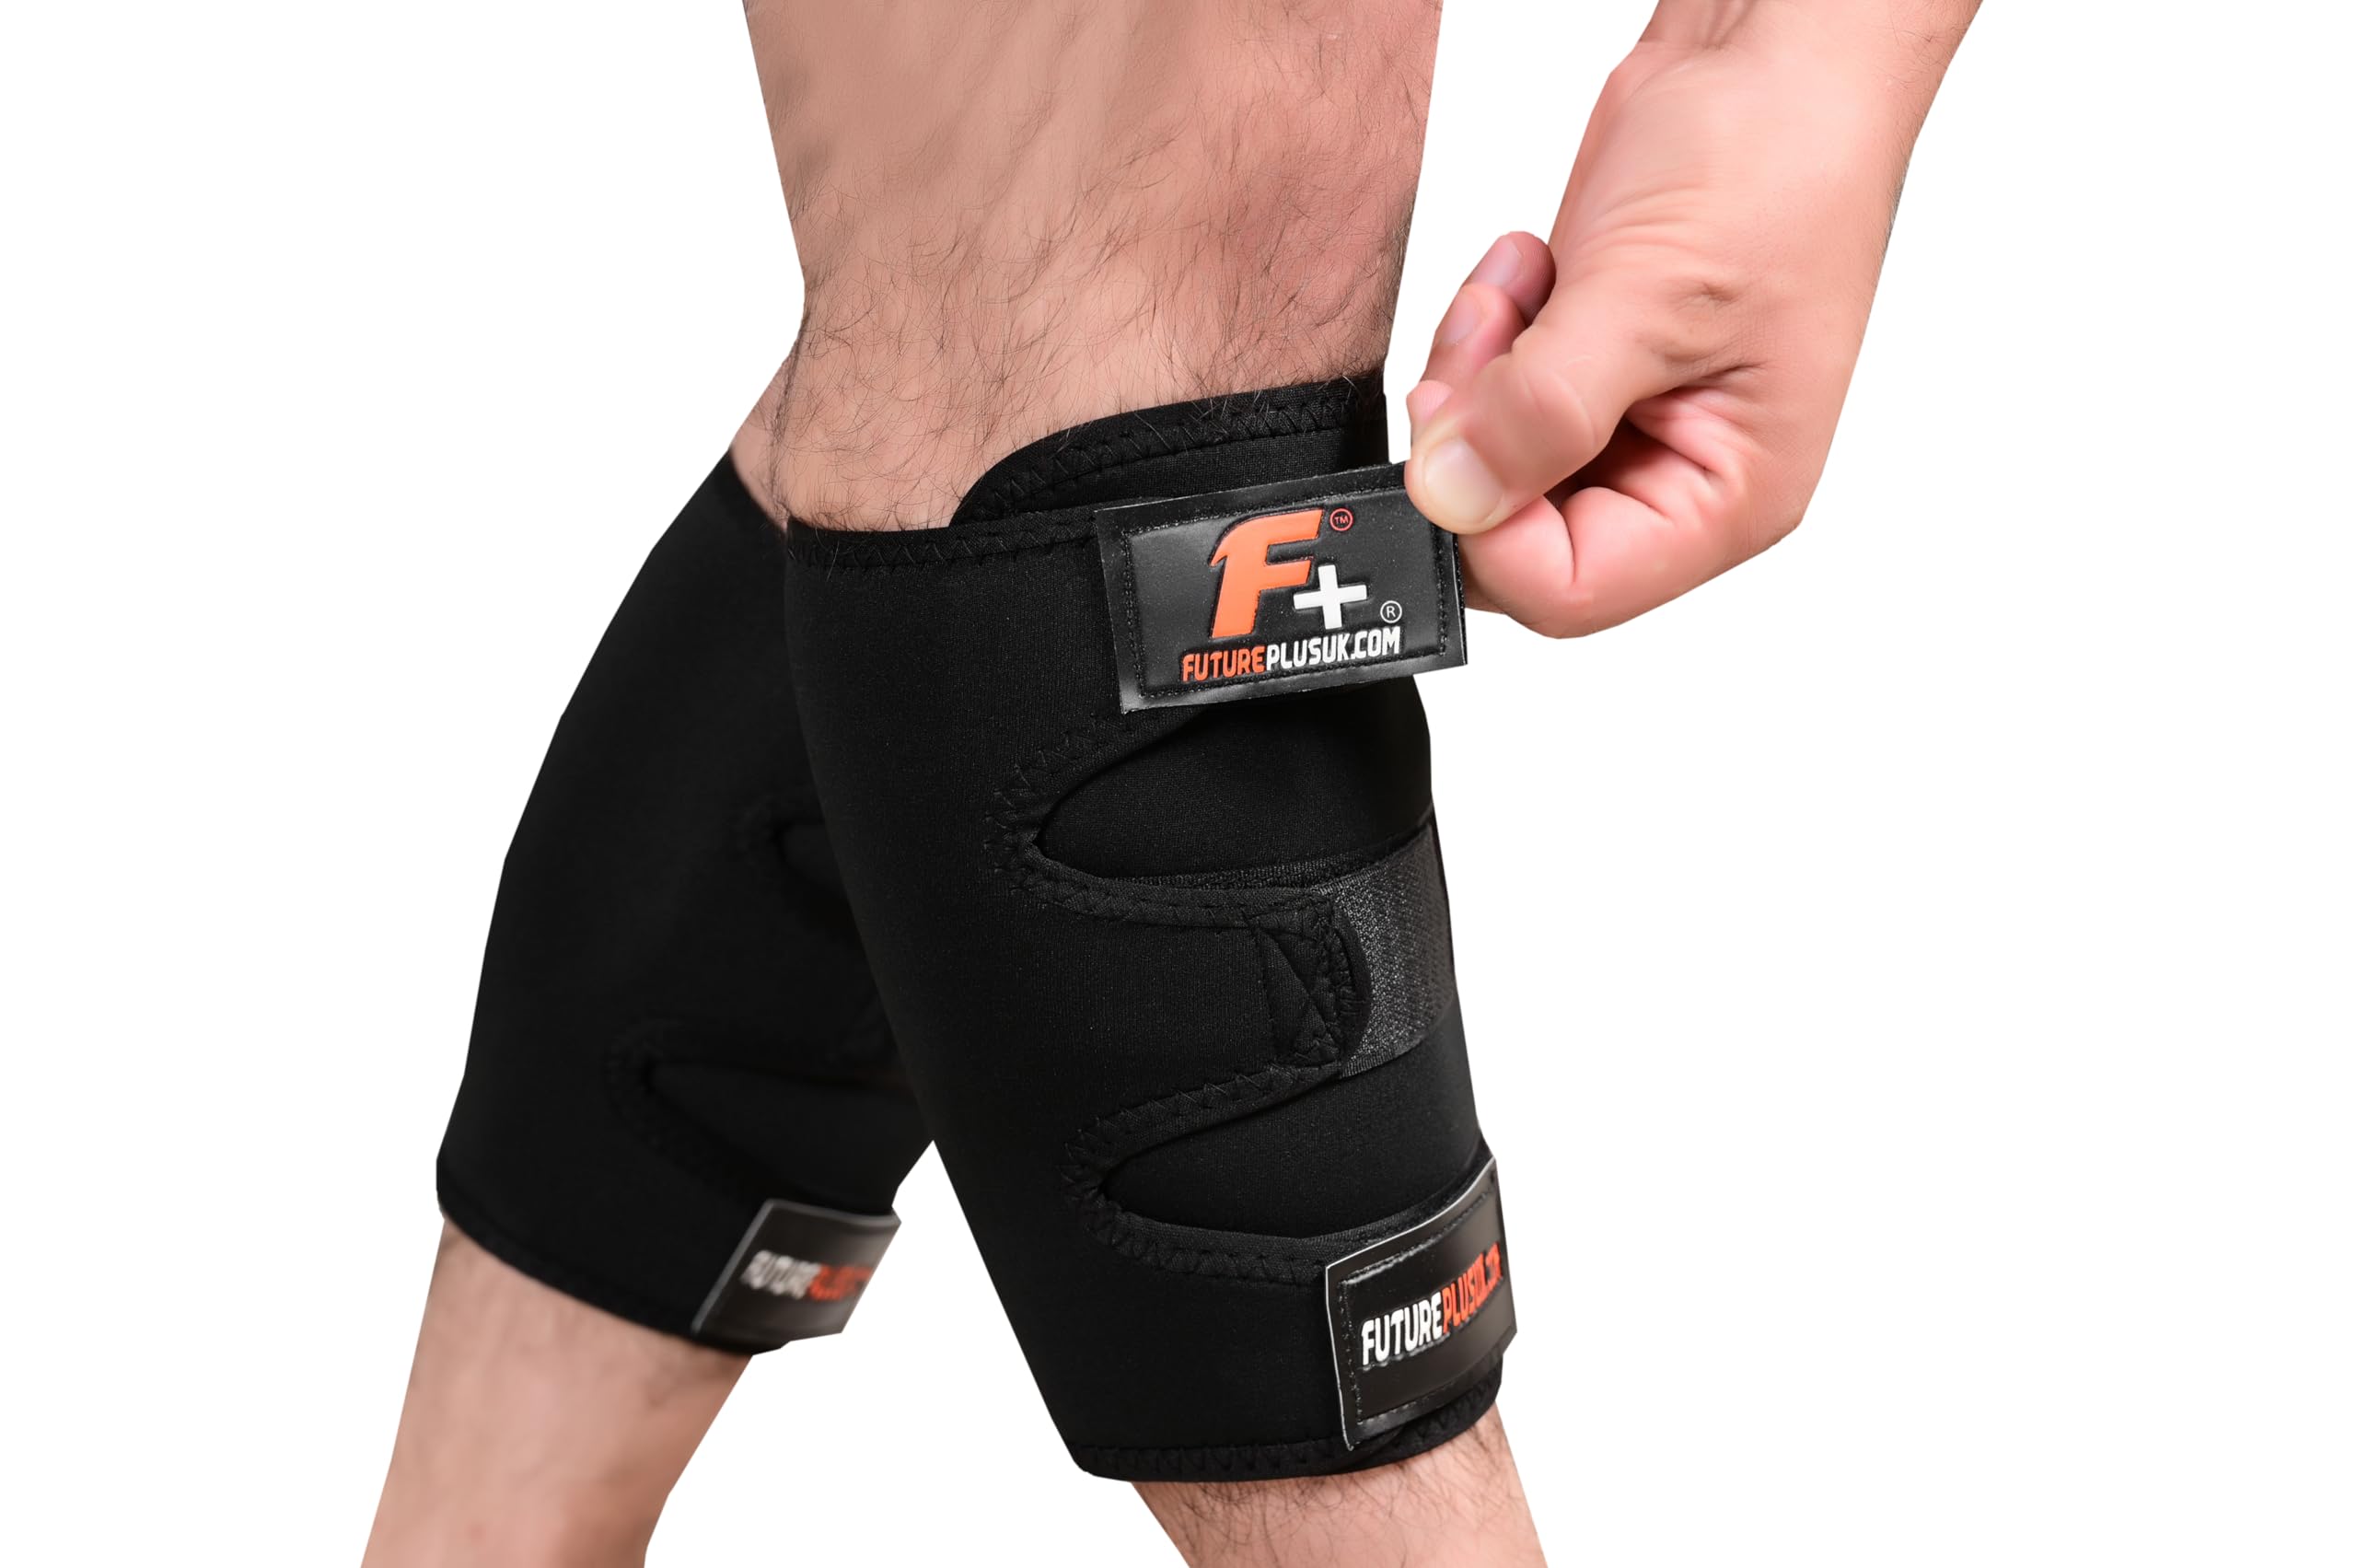 1 Pcs Calf Brace - Adjustable Shin Splint Support - Lower Leg